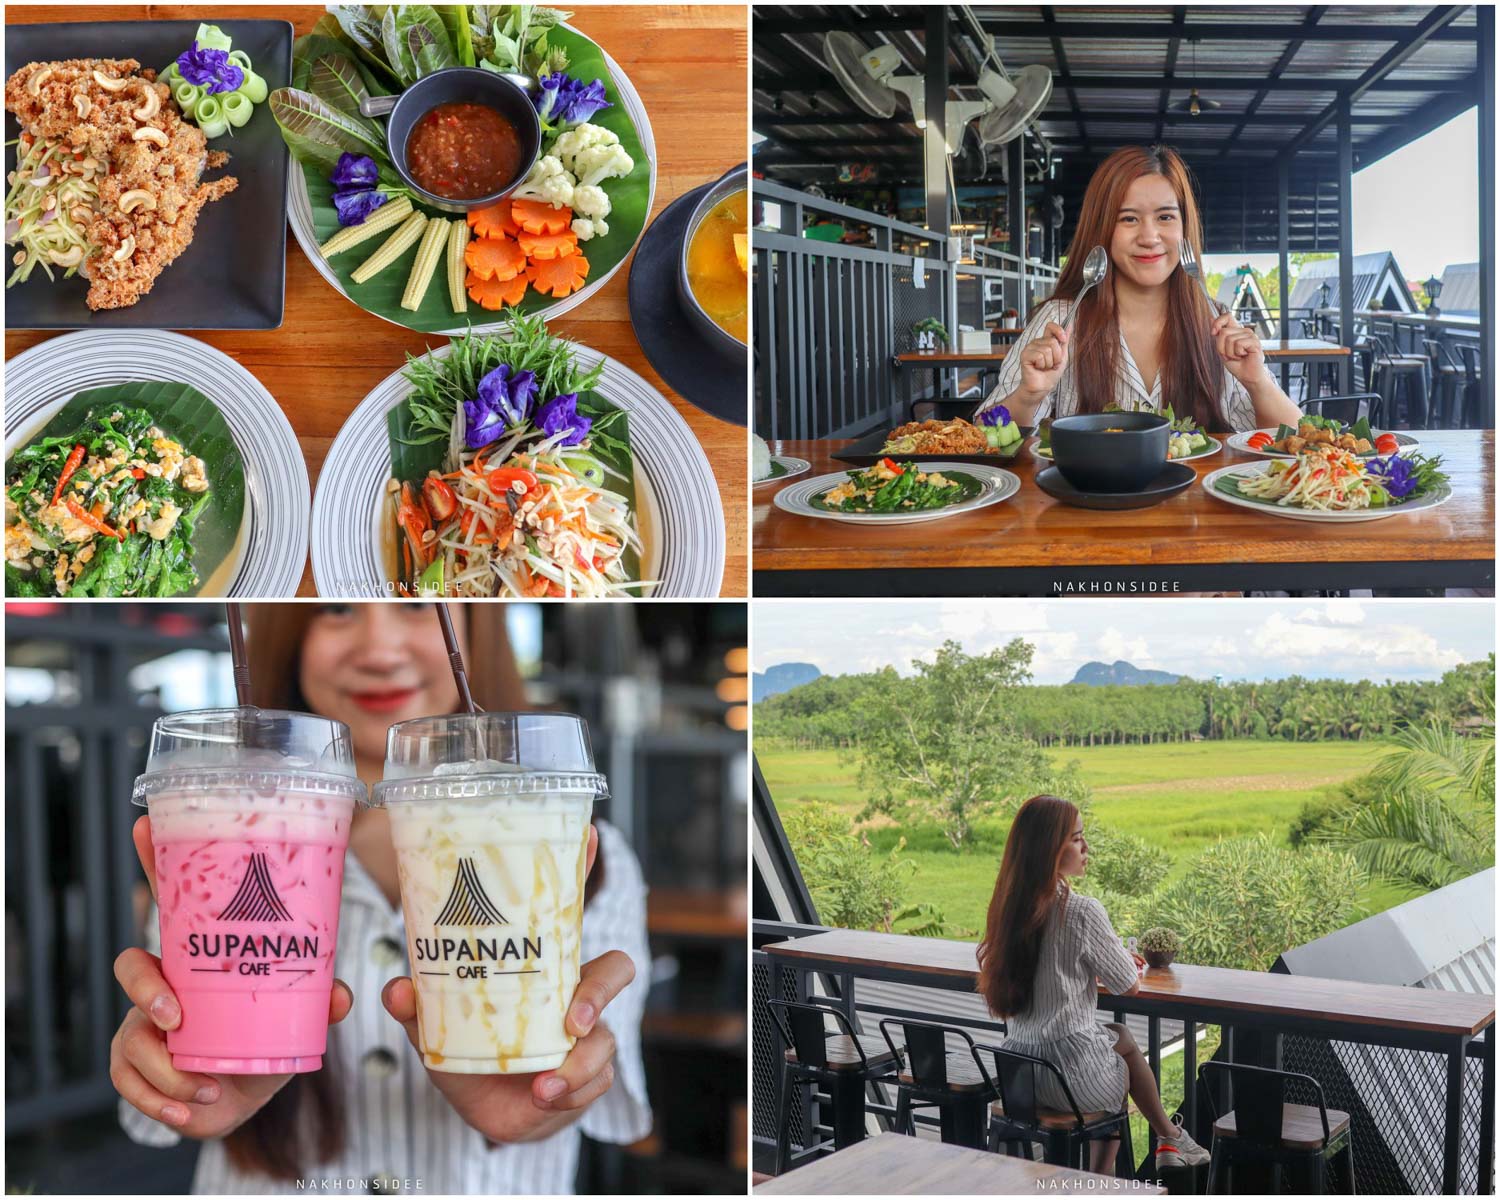 2.-Supanan-Cafe---Resort -จัดได้ว่าเด็ดเป็นคาเฟ่เปิดใหม่ล่าสุด-พัทลุง-อาหารอร่อย-วิวดีย์-น้ำพริกเด็ดมวากก-เป็นทั้งร้านอาหารและคาเฟ่ครับ ที่เที่ยว,ที่พัก,พัทลุง,การท่องเที่ยว,ประเทศไทย,วิถีชีวิต,ชุมชน,ดริฟท์กาแฟ